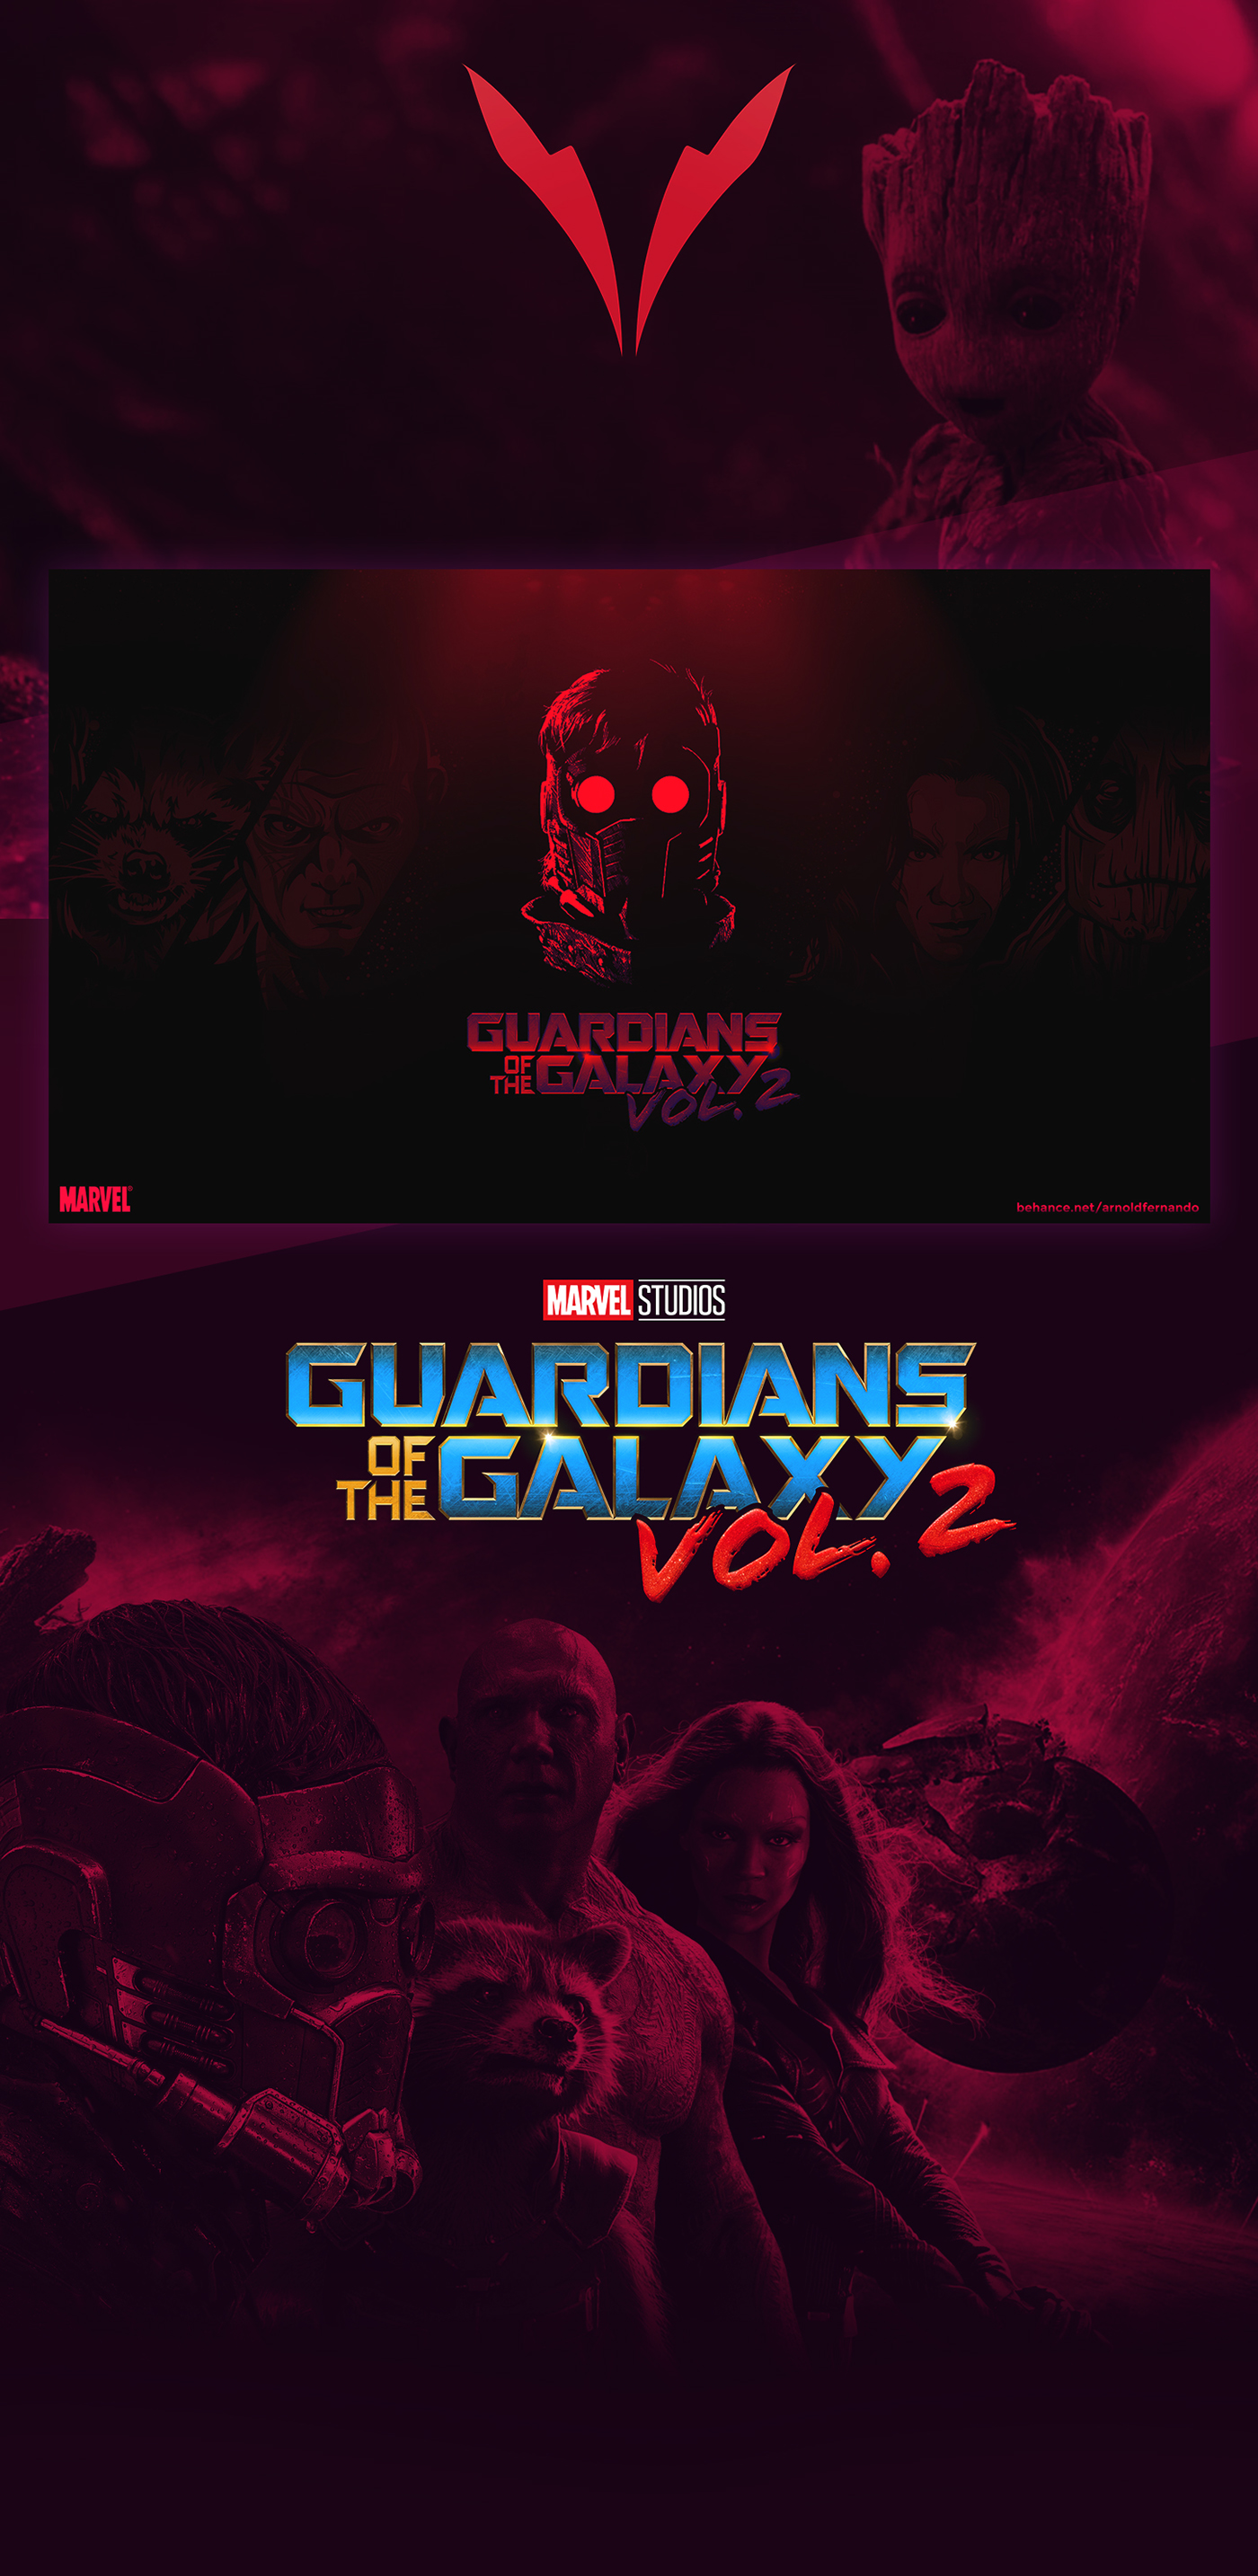 Guardians of the galaxy vol 2 galaxy wallpaer free download galaxy